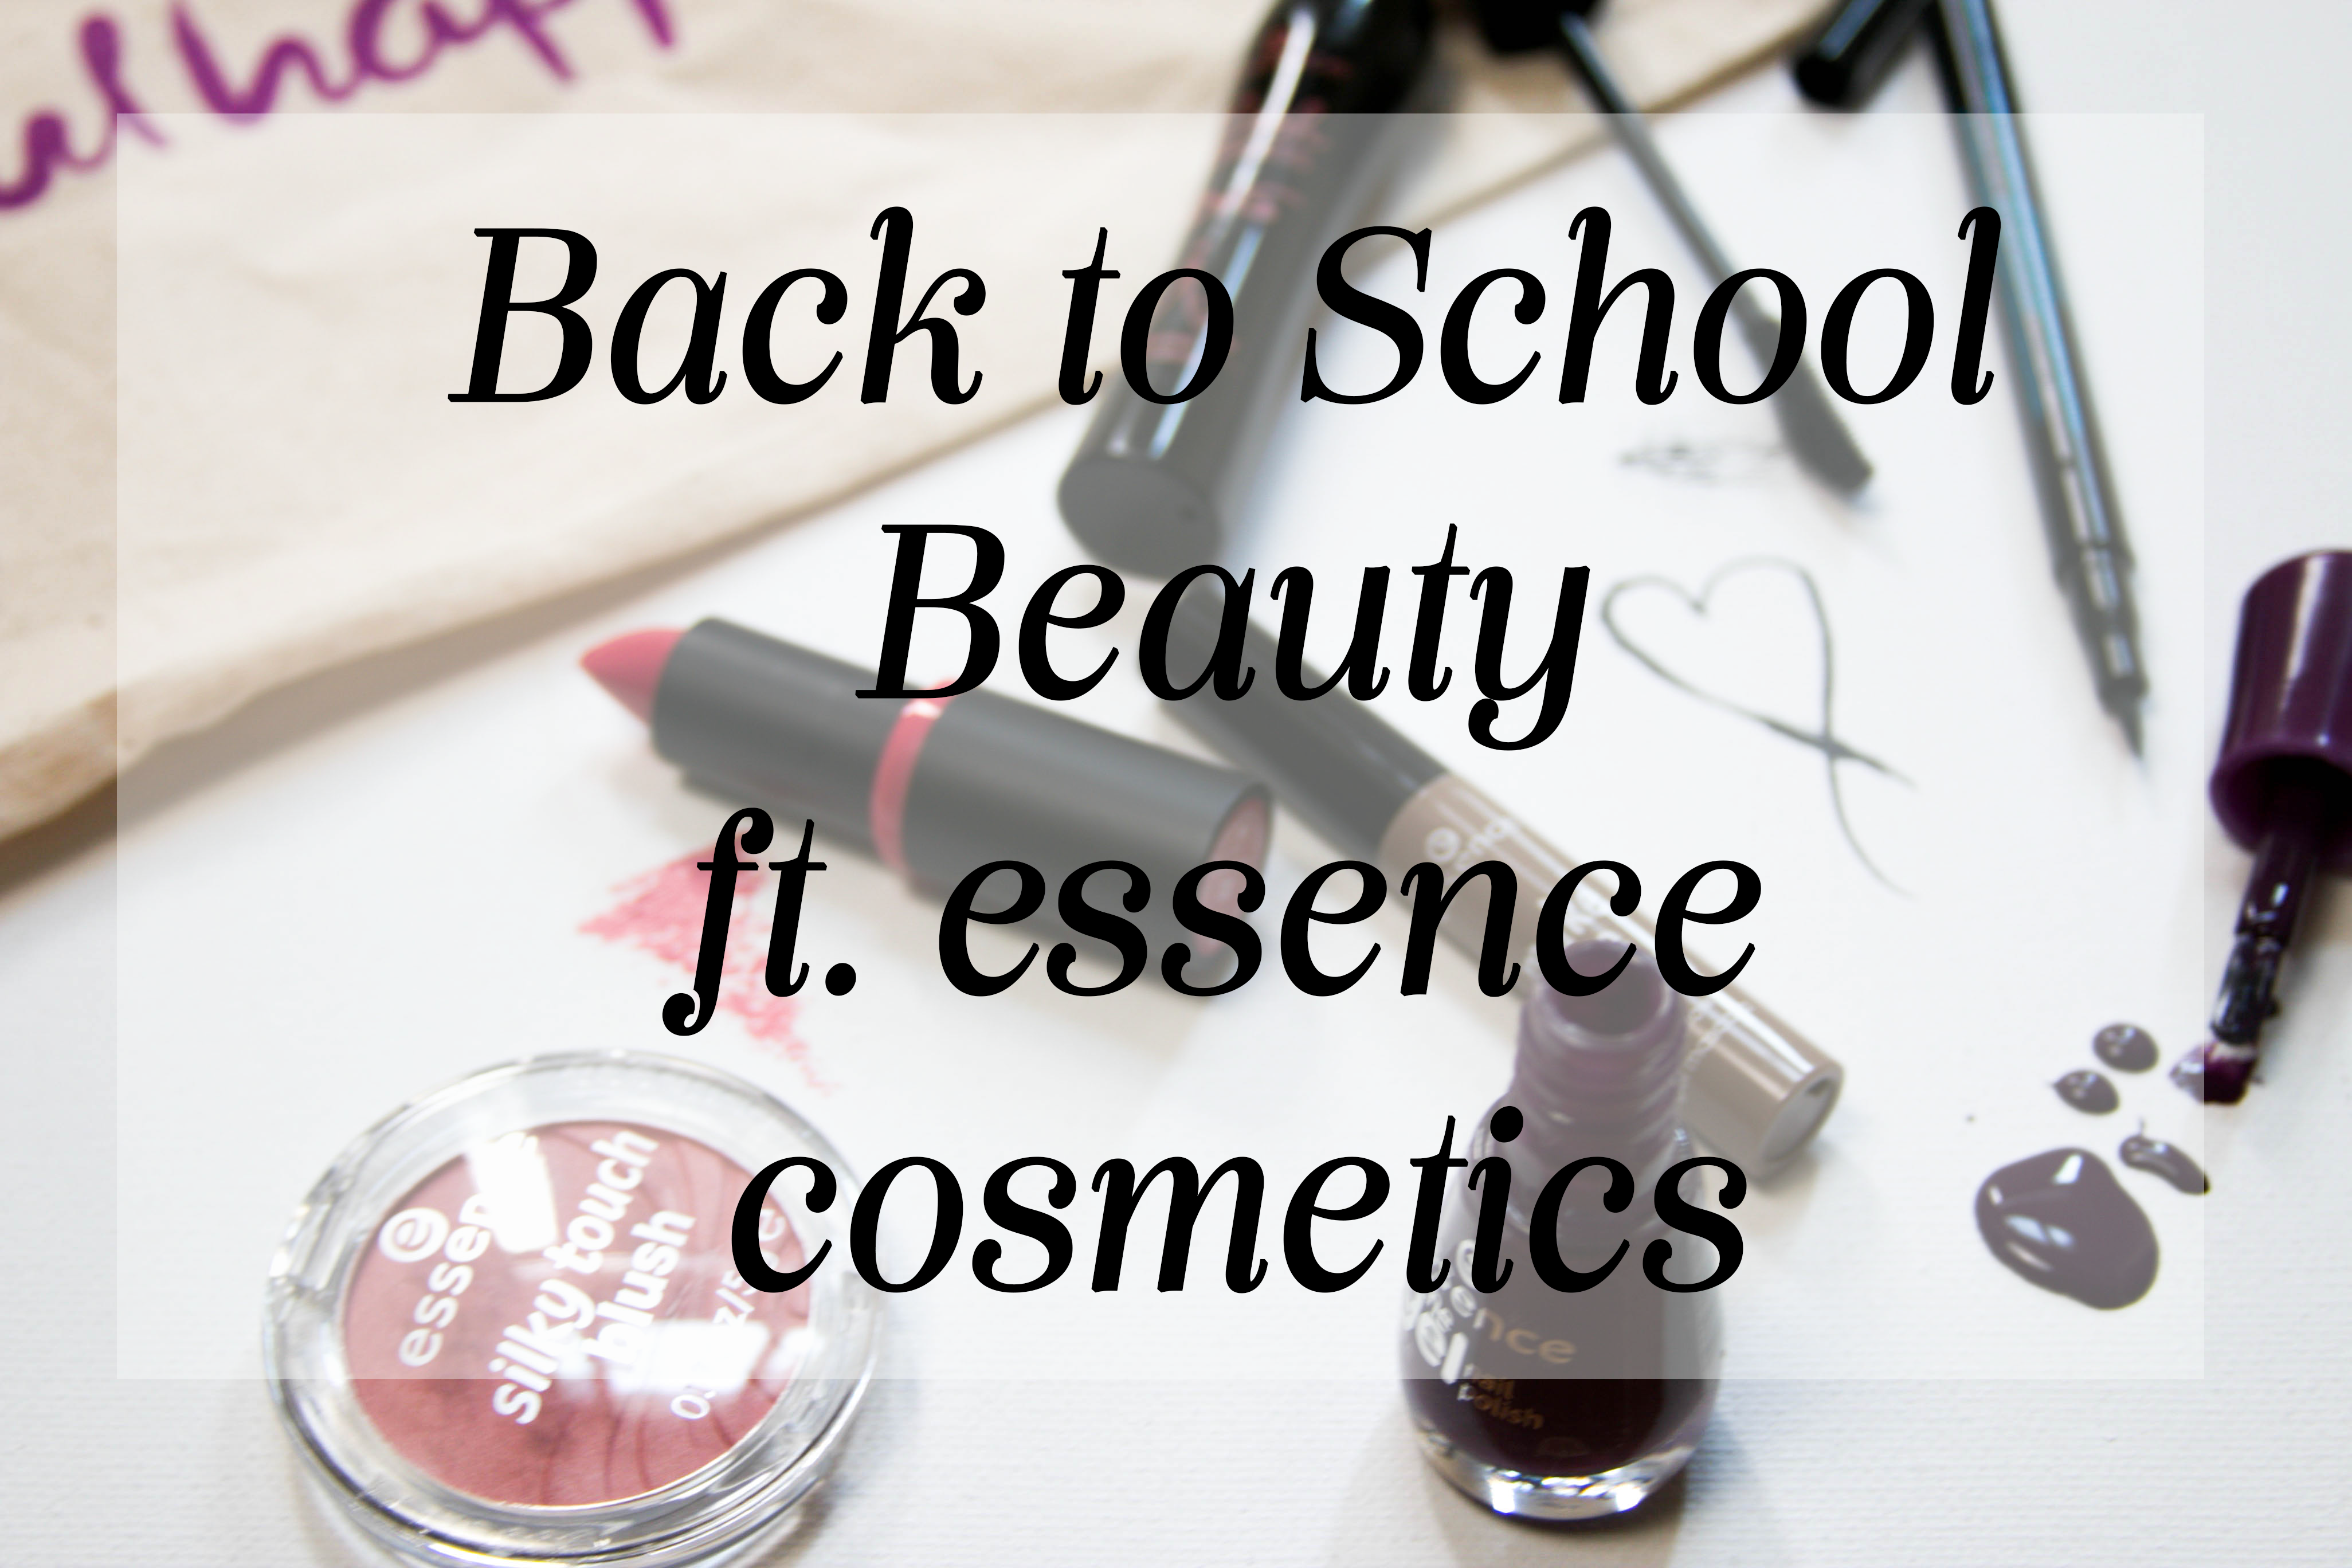 Jordan Taylor C - Back to School Beauty ft. essence cosmetics